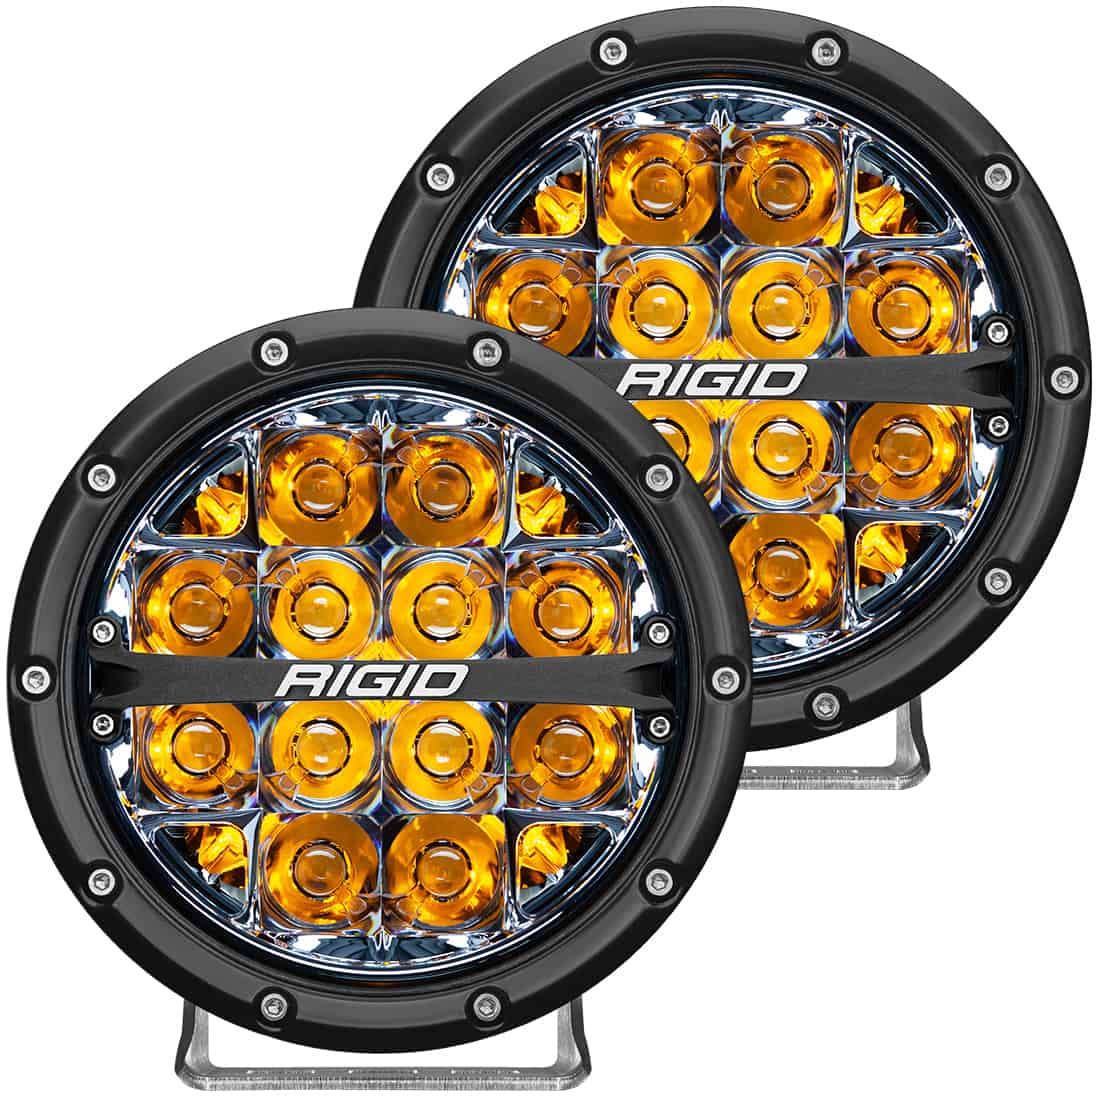 360-Series 6 Inch Led Off-Road Spot Beam Amber Backlight Pair RIGID Lighting 36201